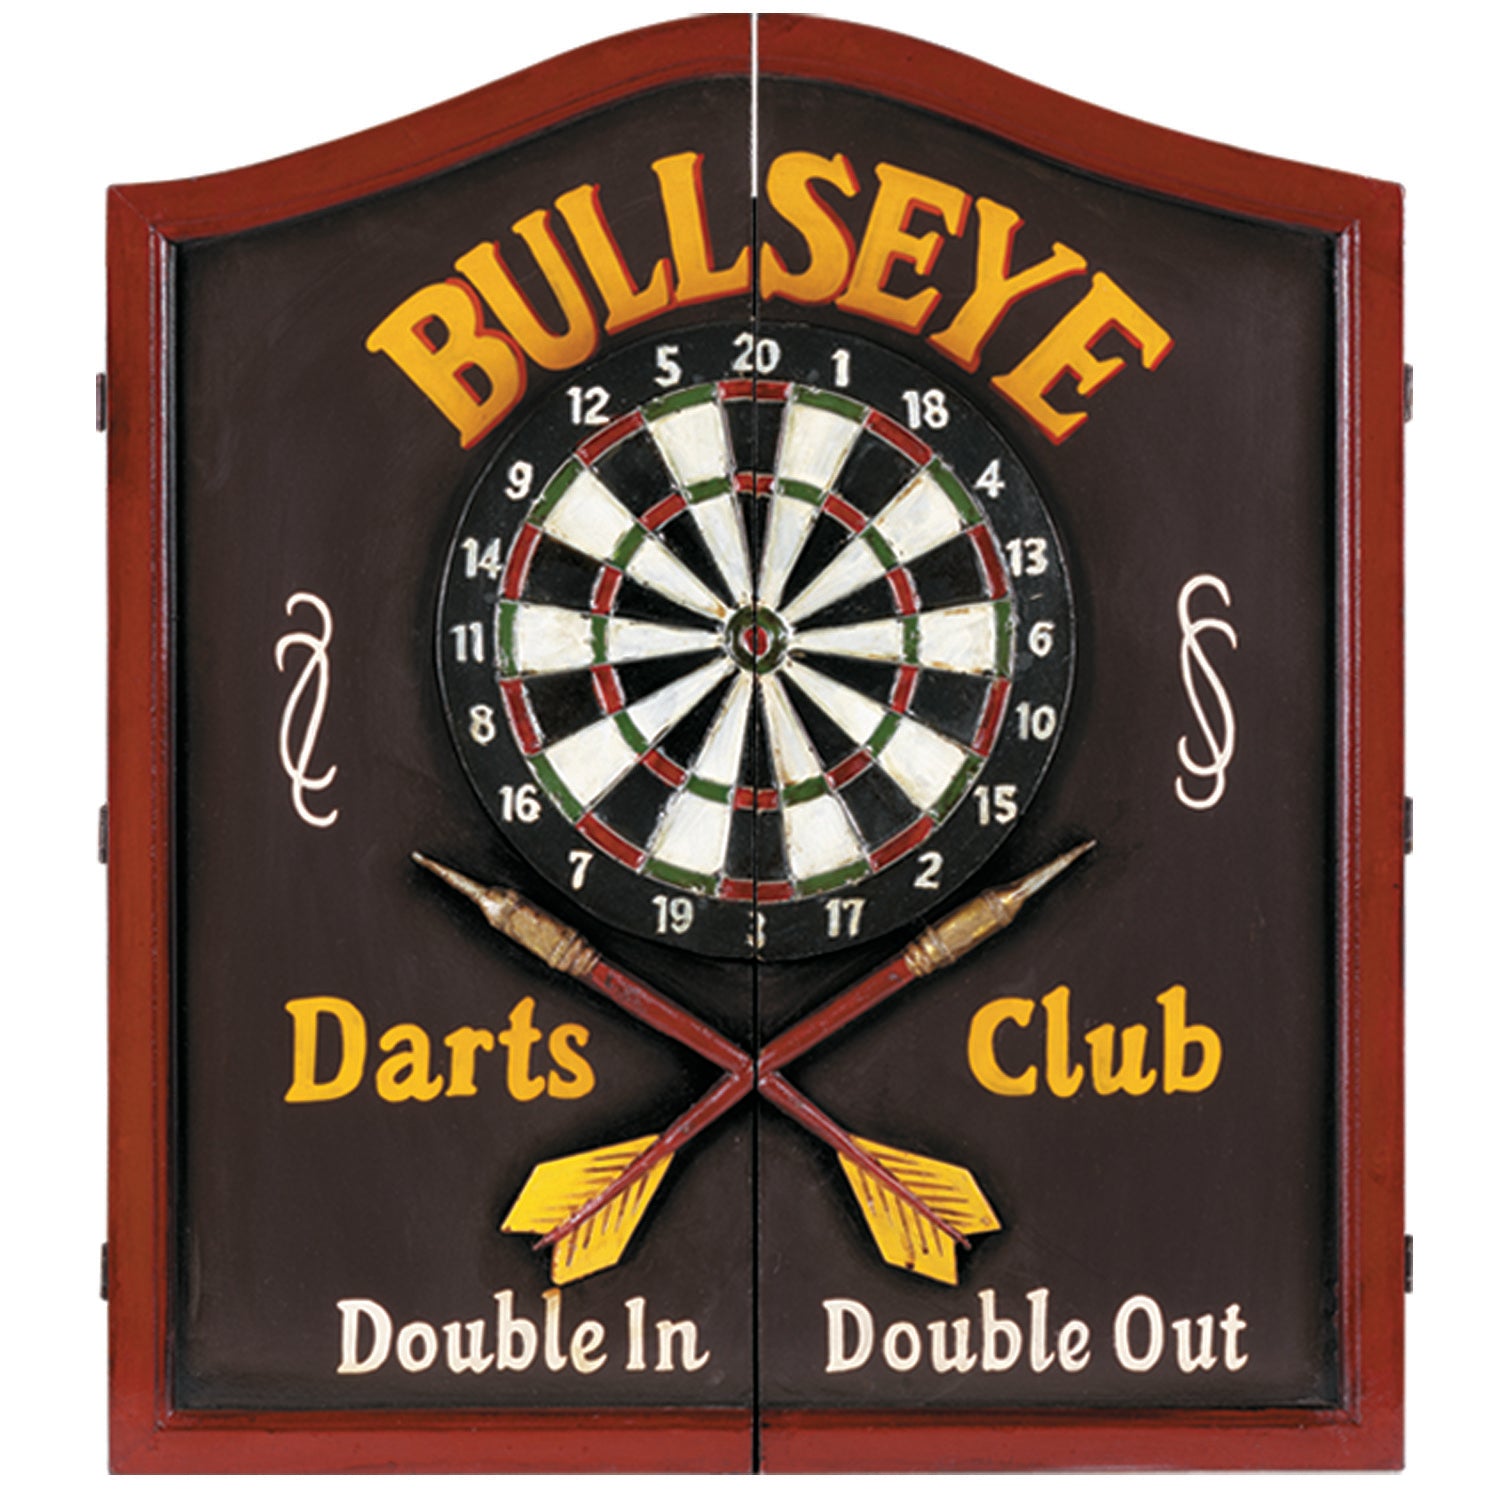 RAM Game Room "Bullseye Darts Club" Dartboard Cabinet